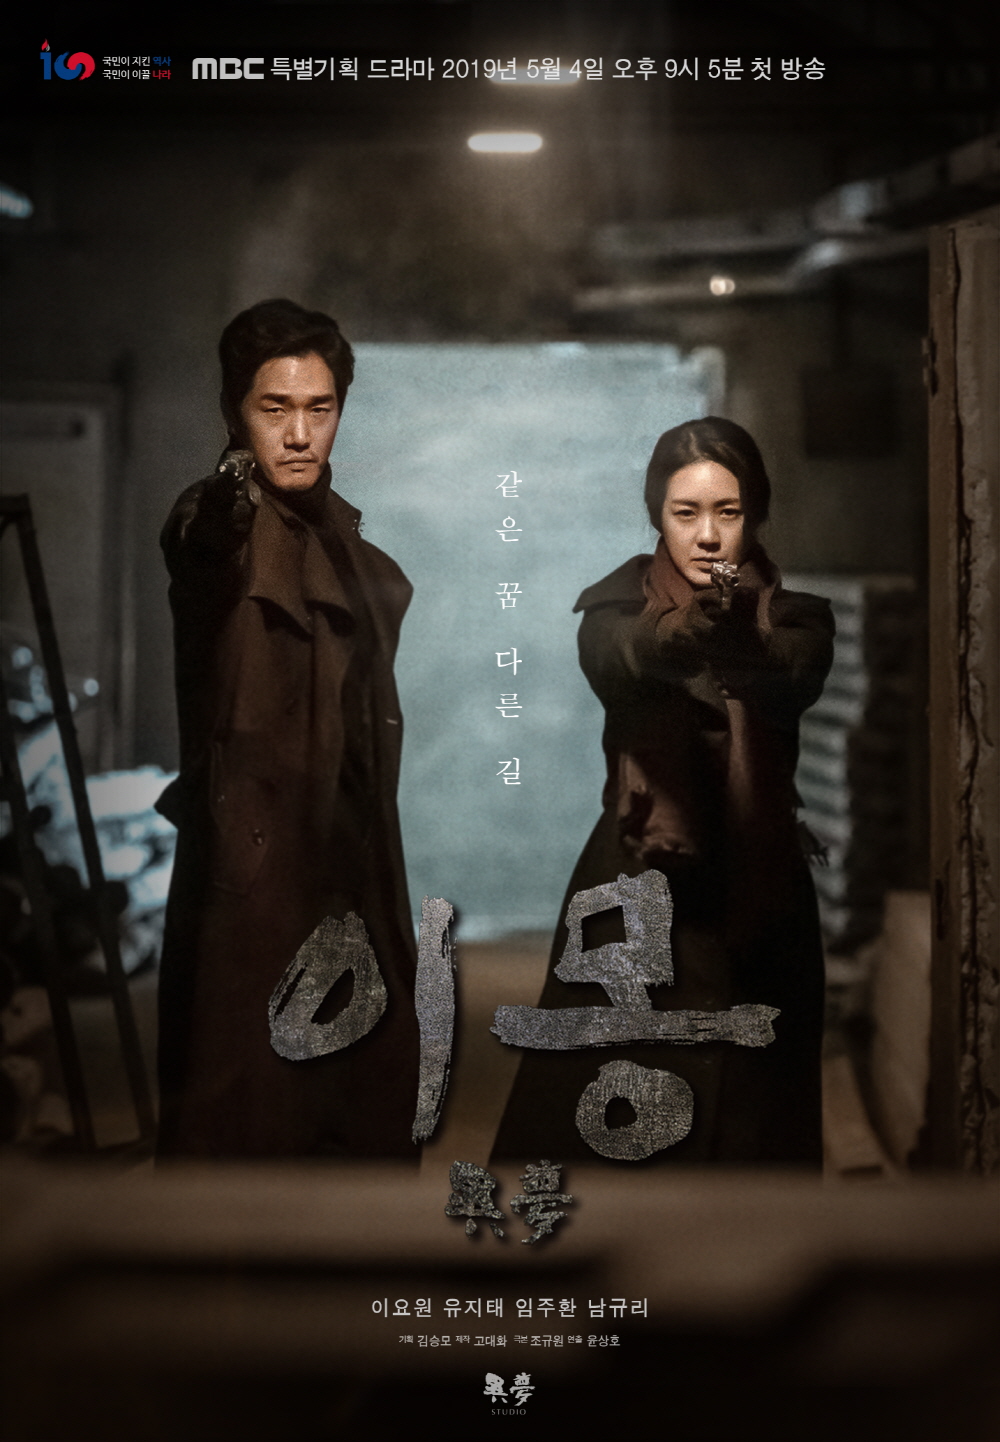 kesan pertamma nonton drama korea different dreams (2019)